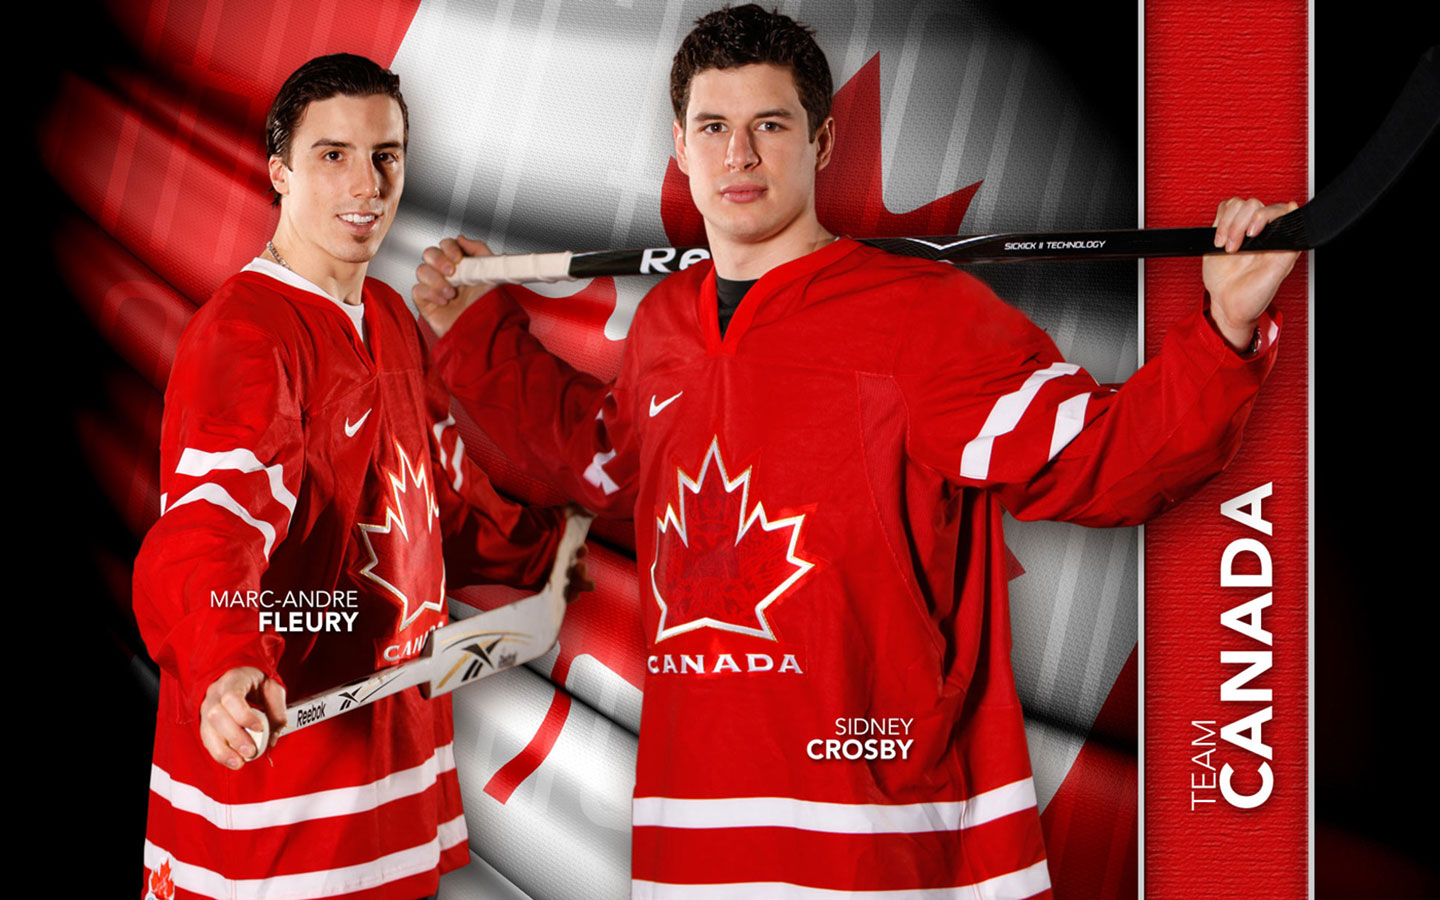 Gallery Team Canada Hockey Wallpaper